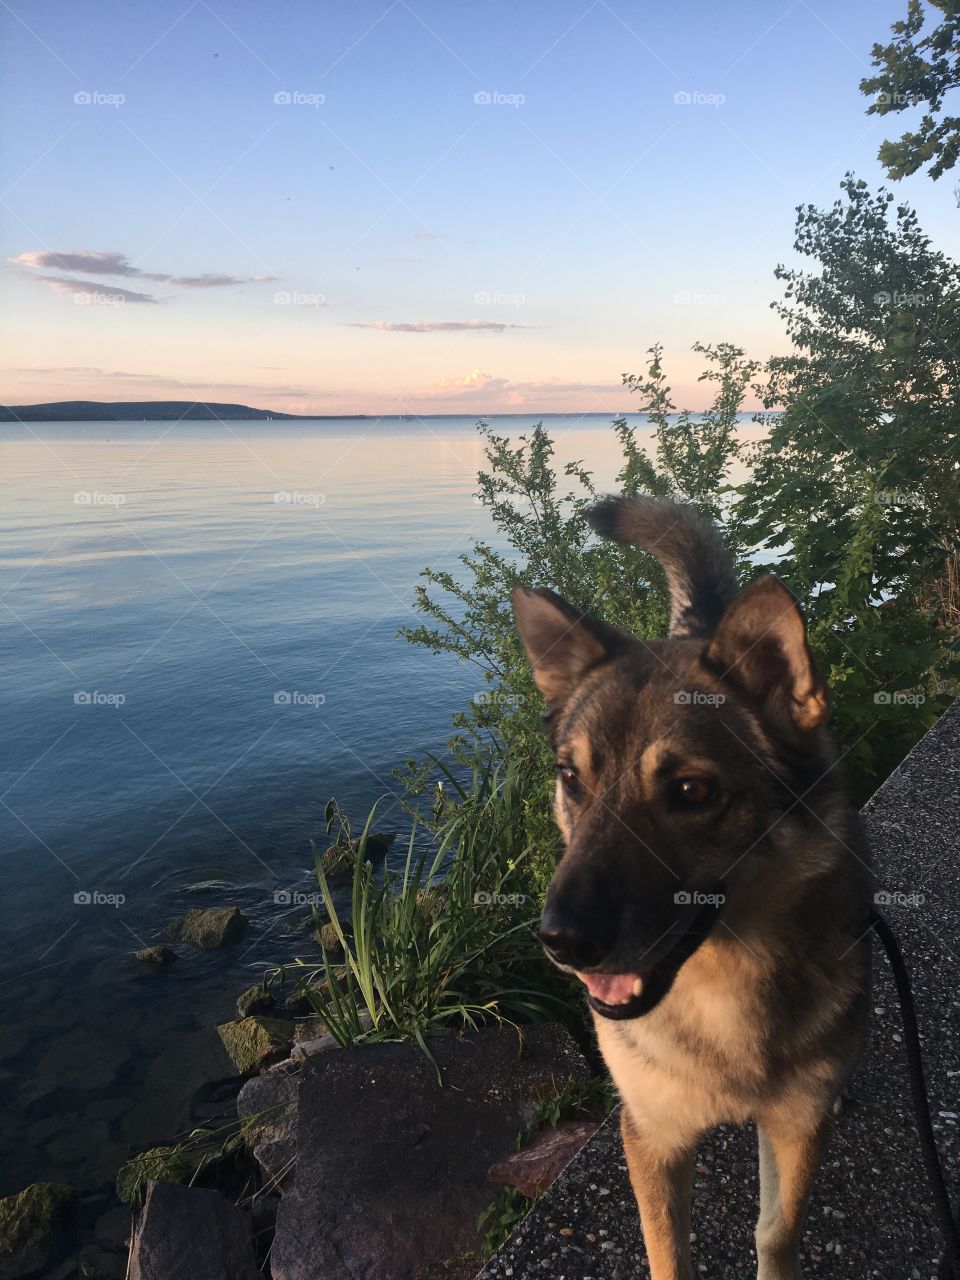 Dog at the Sunset lake Landscape 